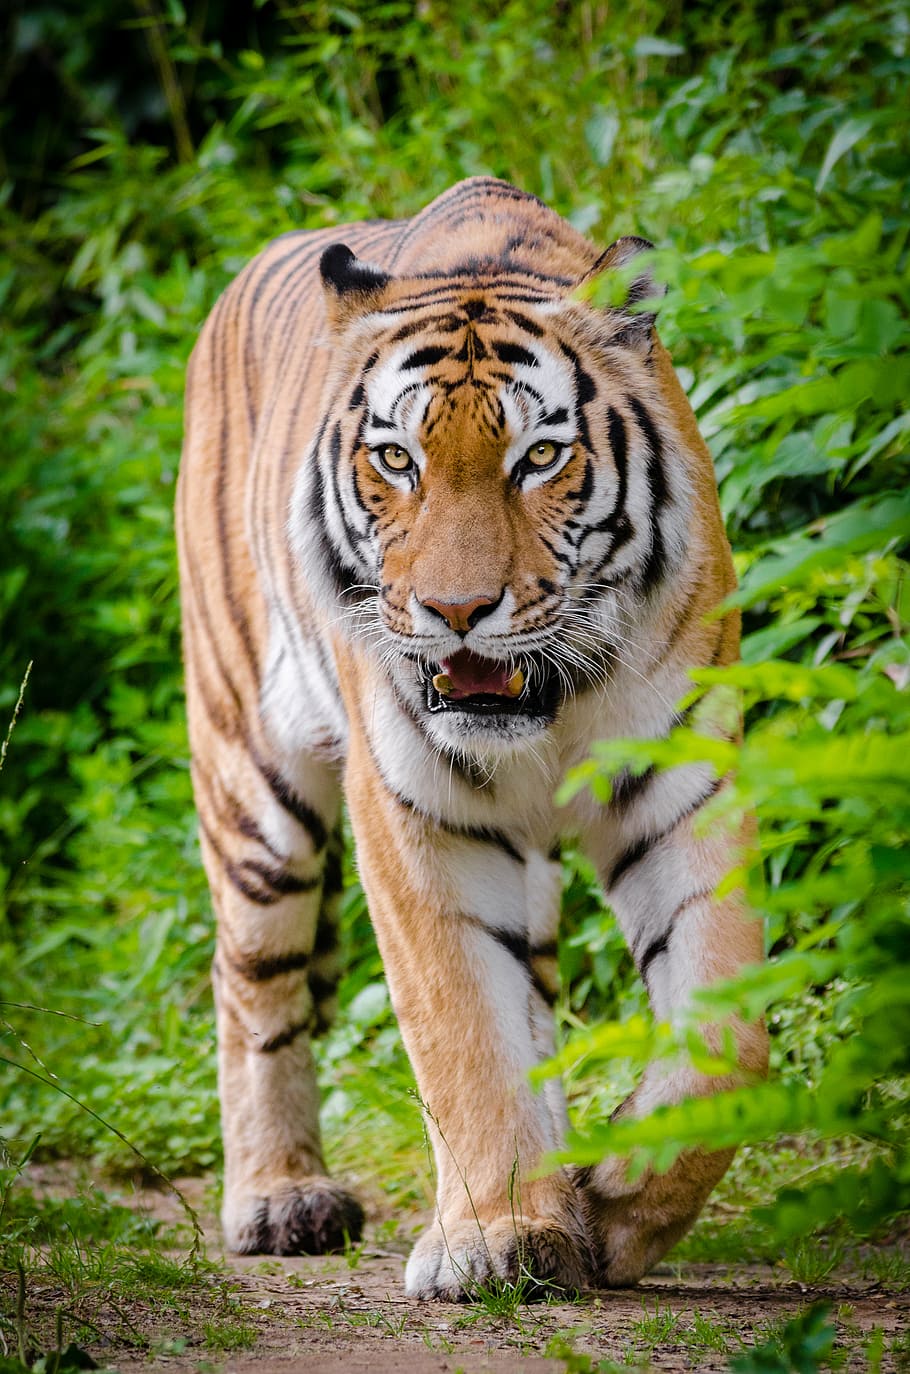 Siberian Tiger, Elroy, Zoo, Duisburg, Germany, tiger, walking, plants, animal, animal themes